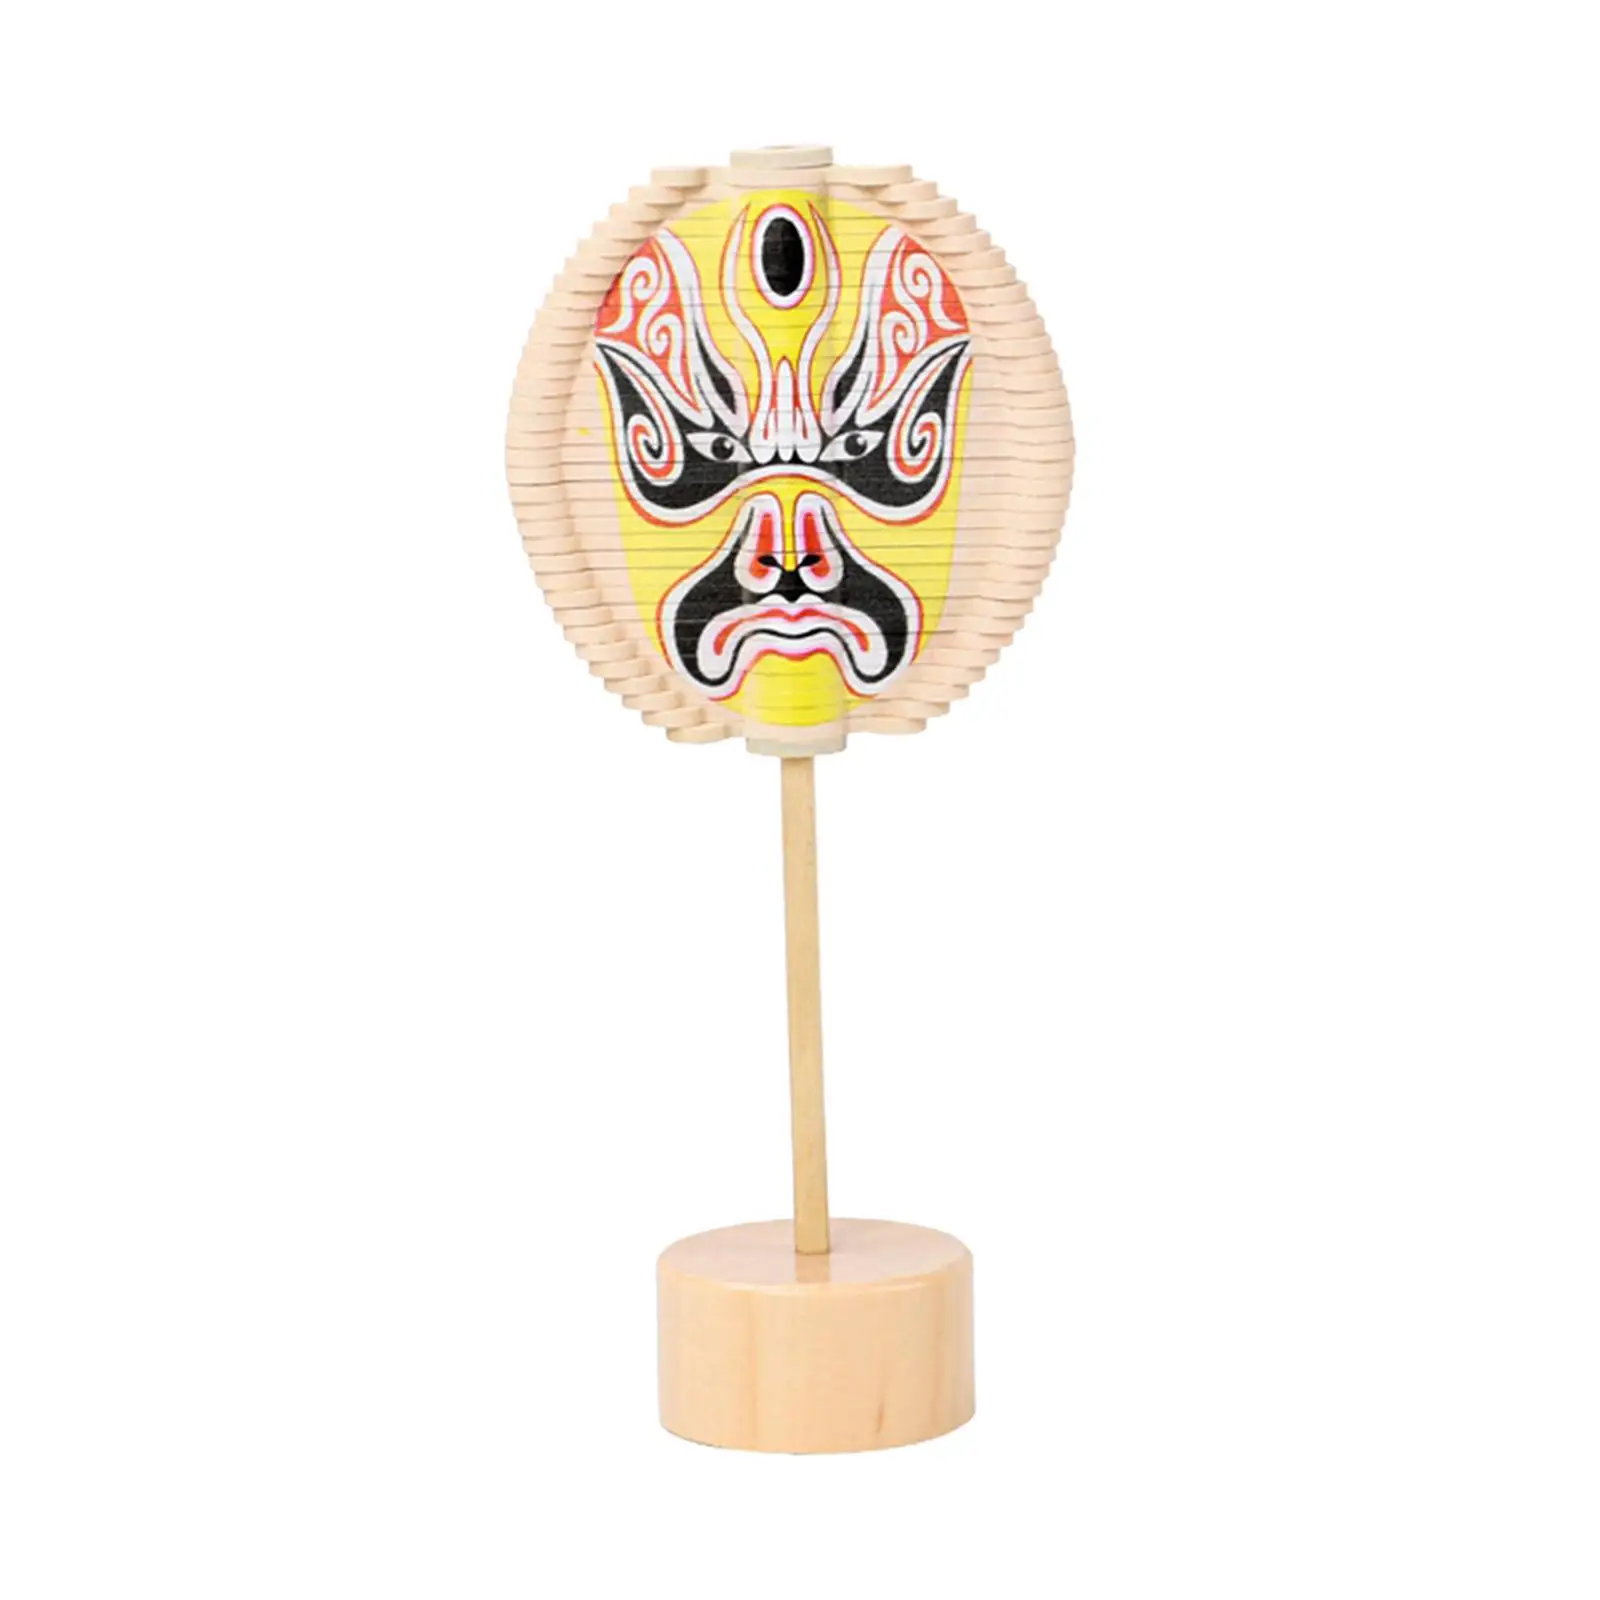 Wooden Rotating Spiral Lollipop Desktop Ornaments Gadget for Party Favors